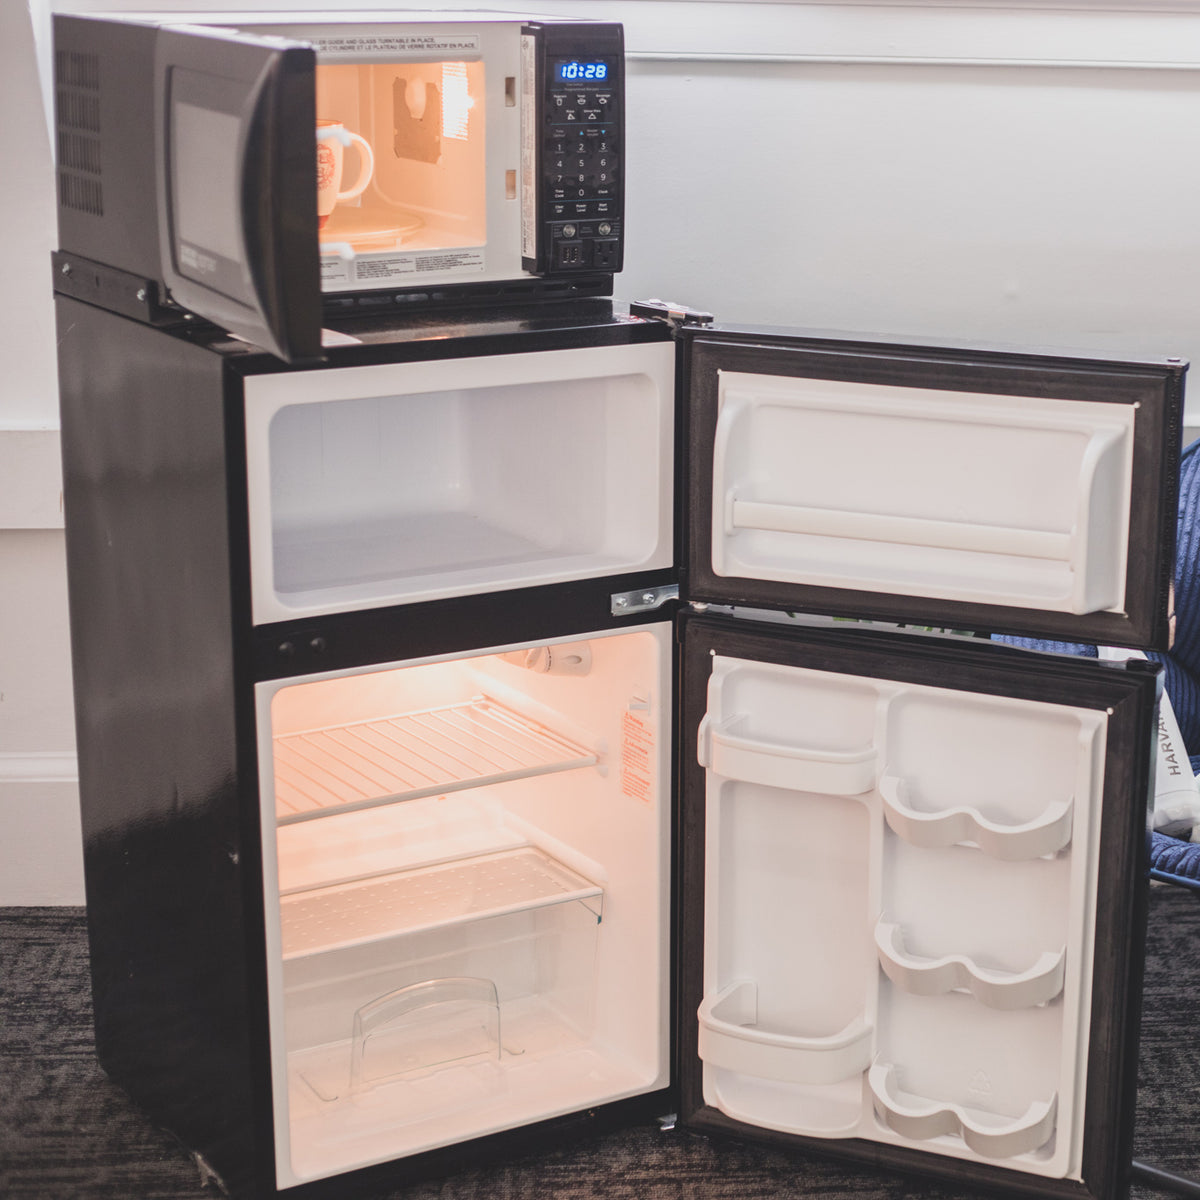 Microfridge Compact Refrigerator, Freezer and Microwave, 2.9 cu